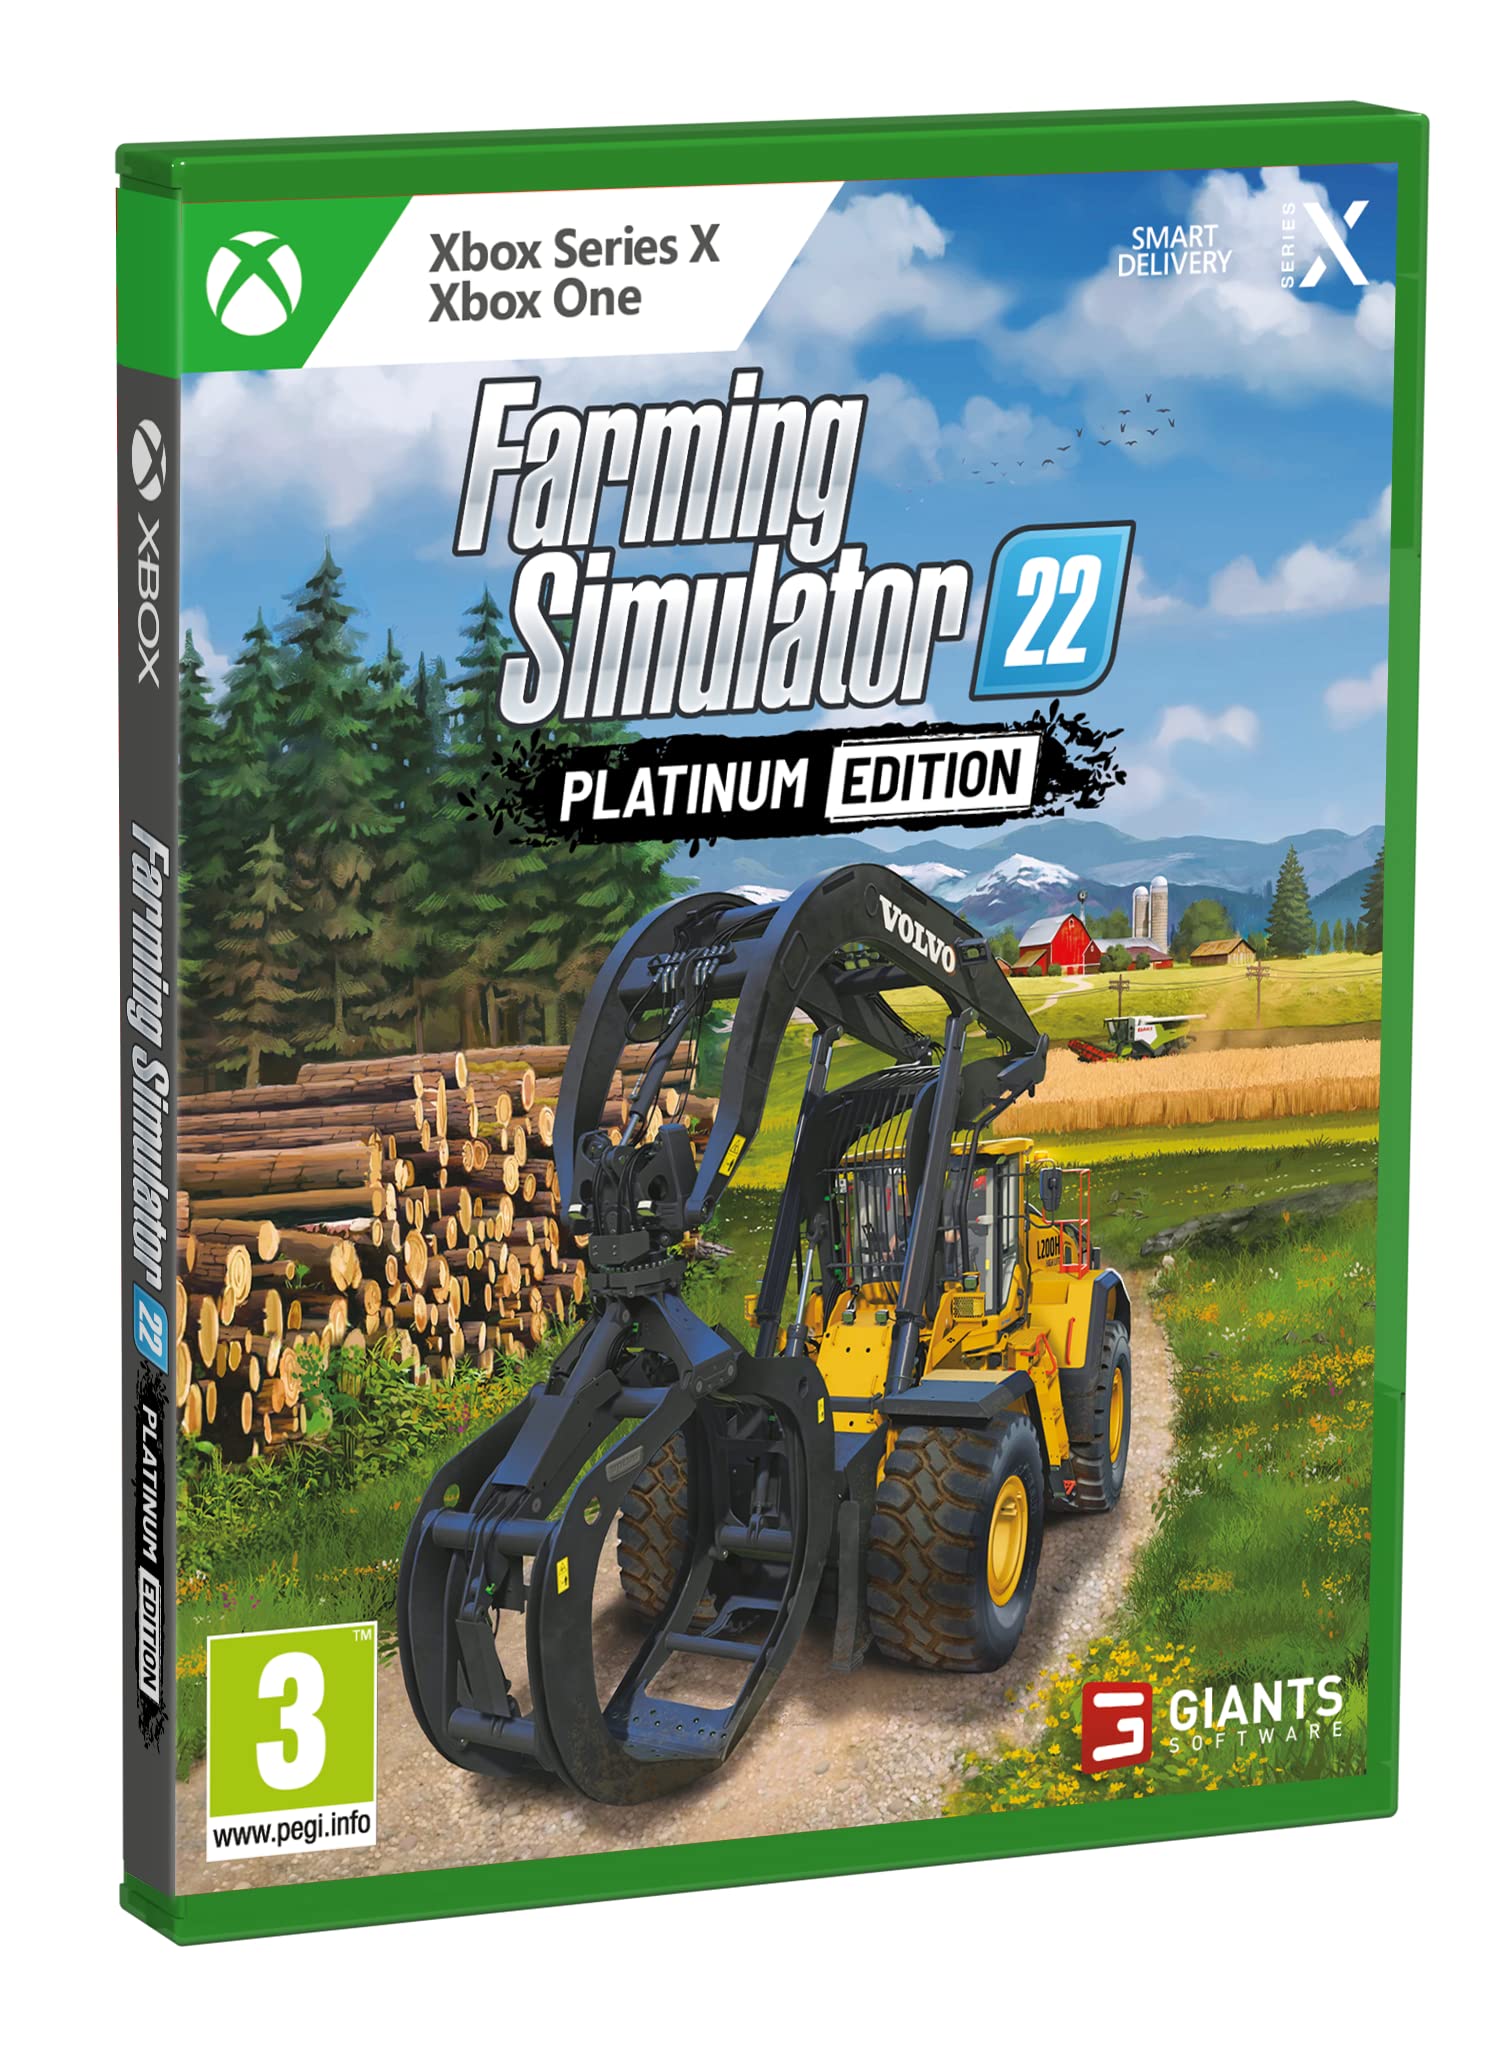 Landwirtschafts-Simulator 19 - Konsole PS4